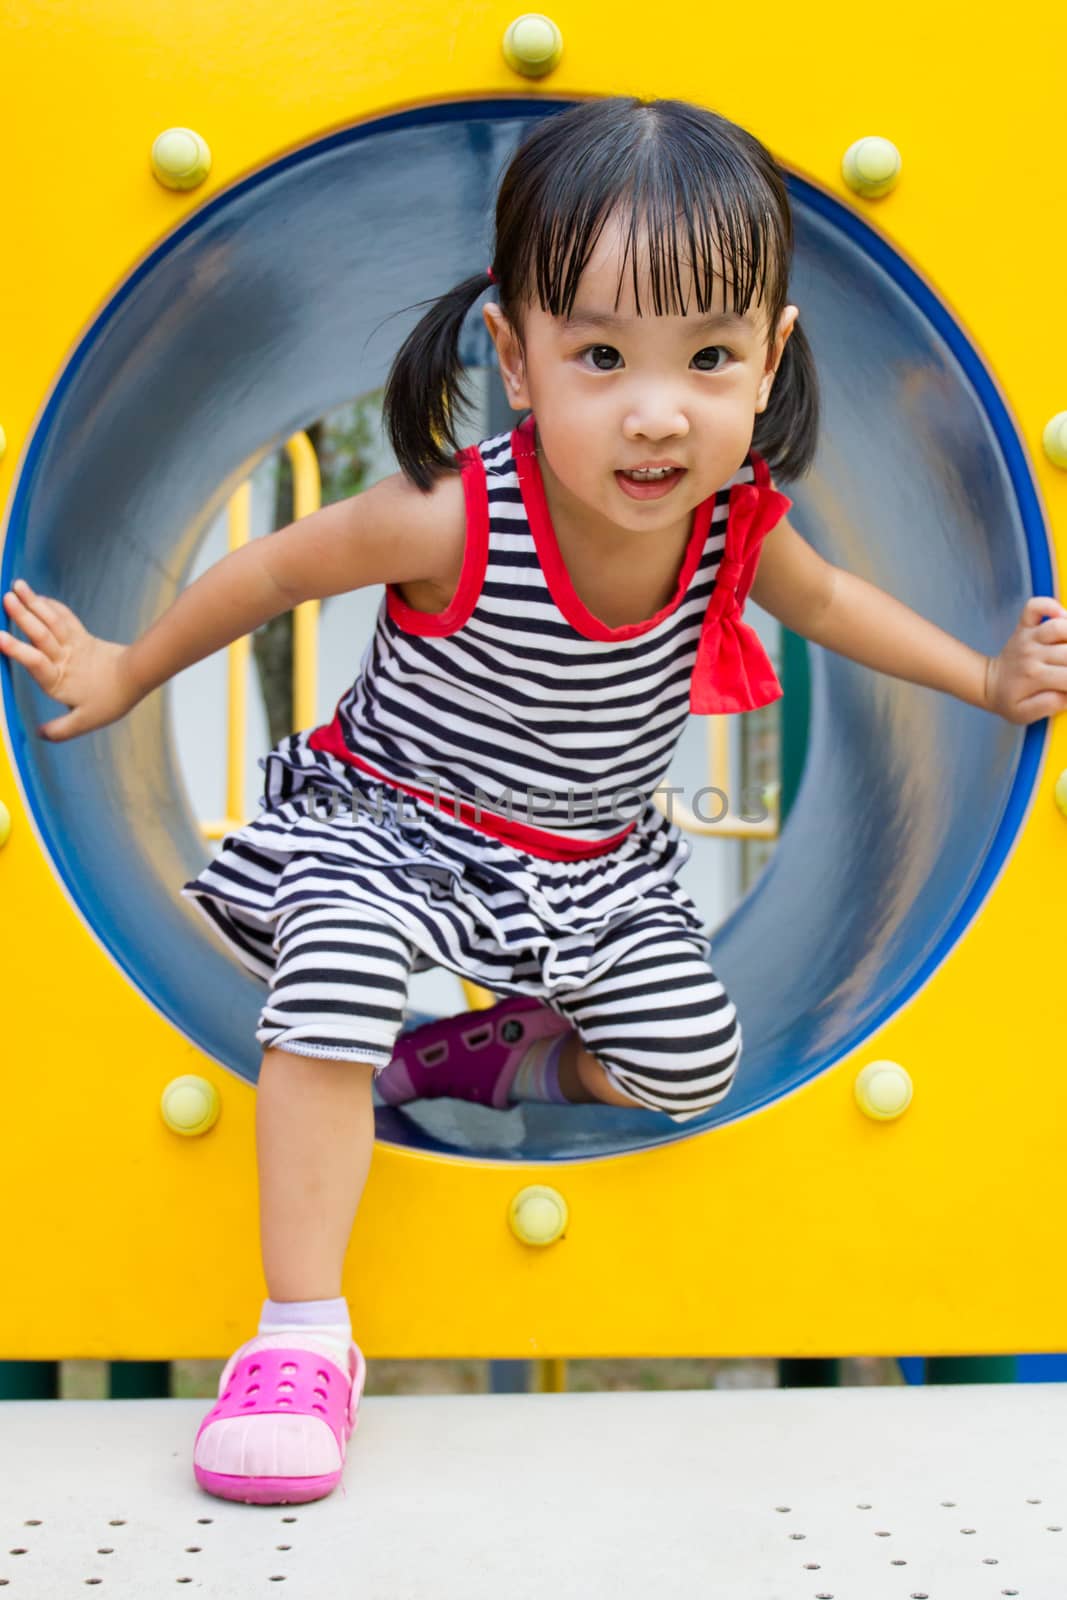 Asian Kid Crawling on Playground Tube by kiankhoon